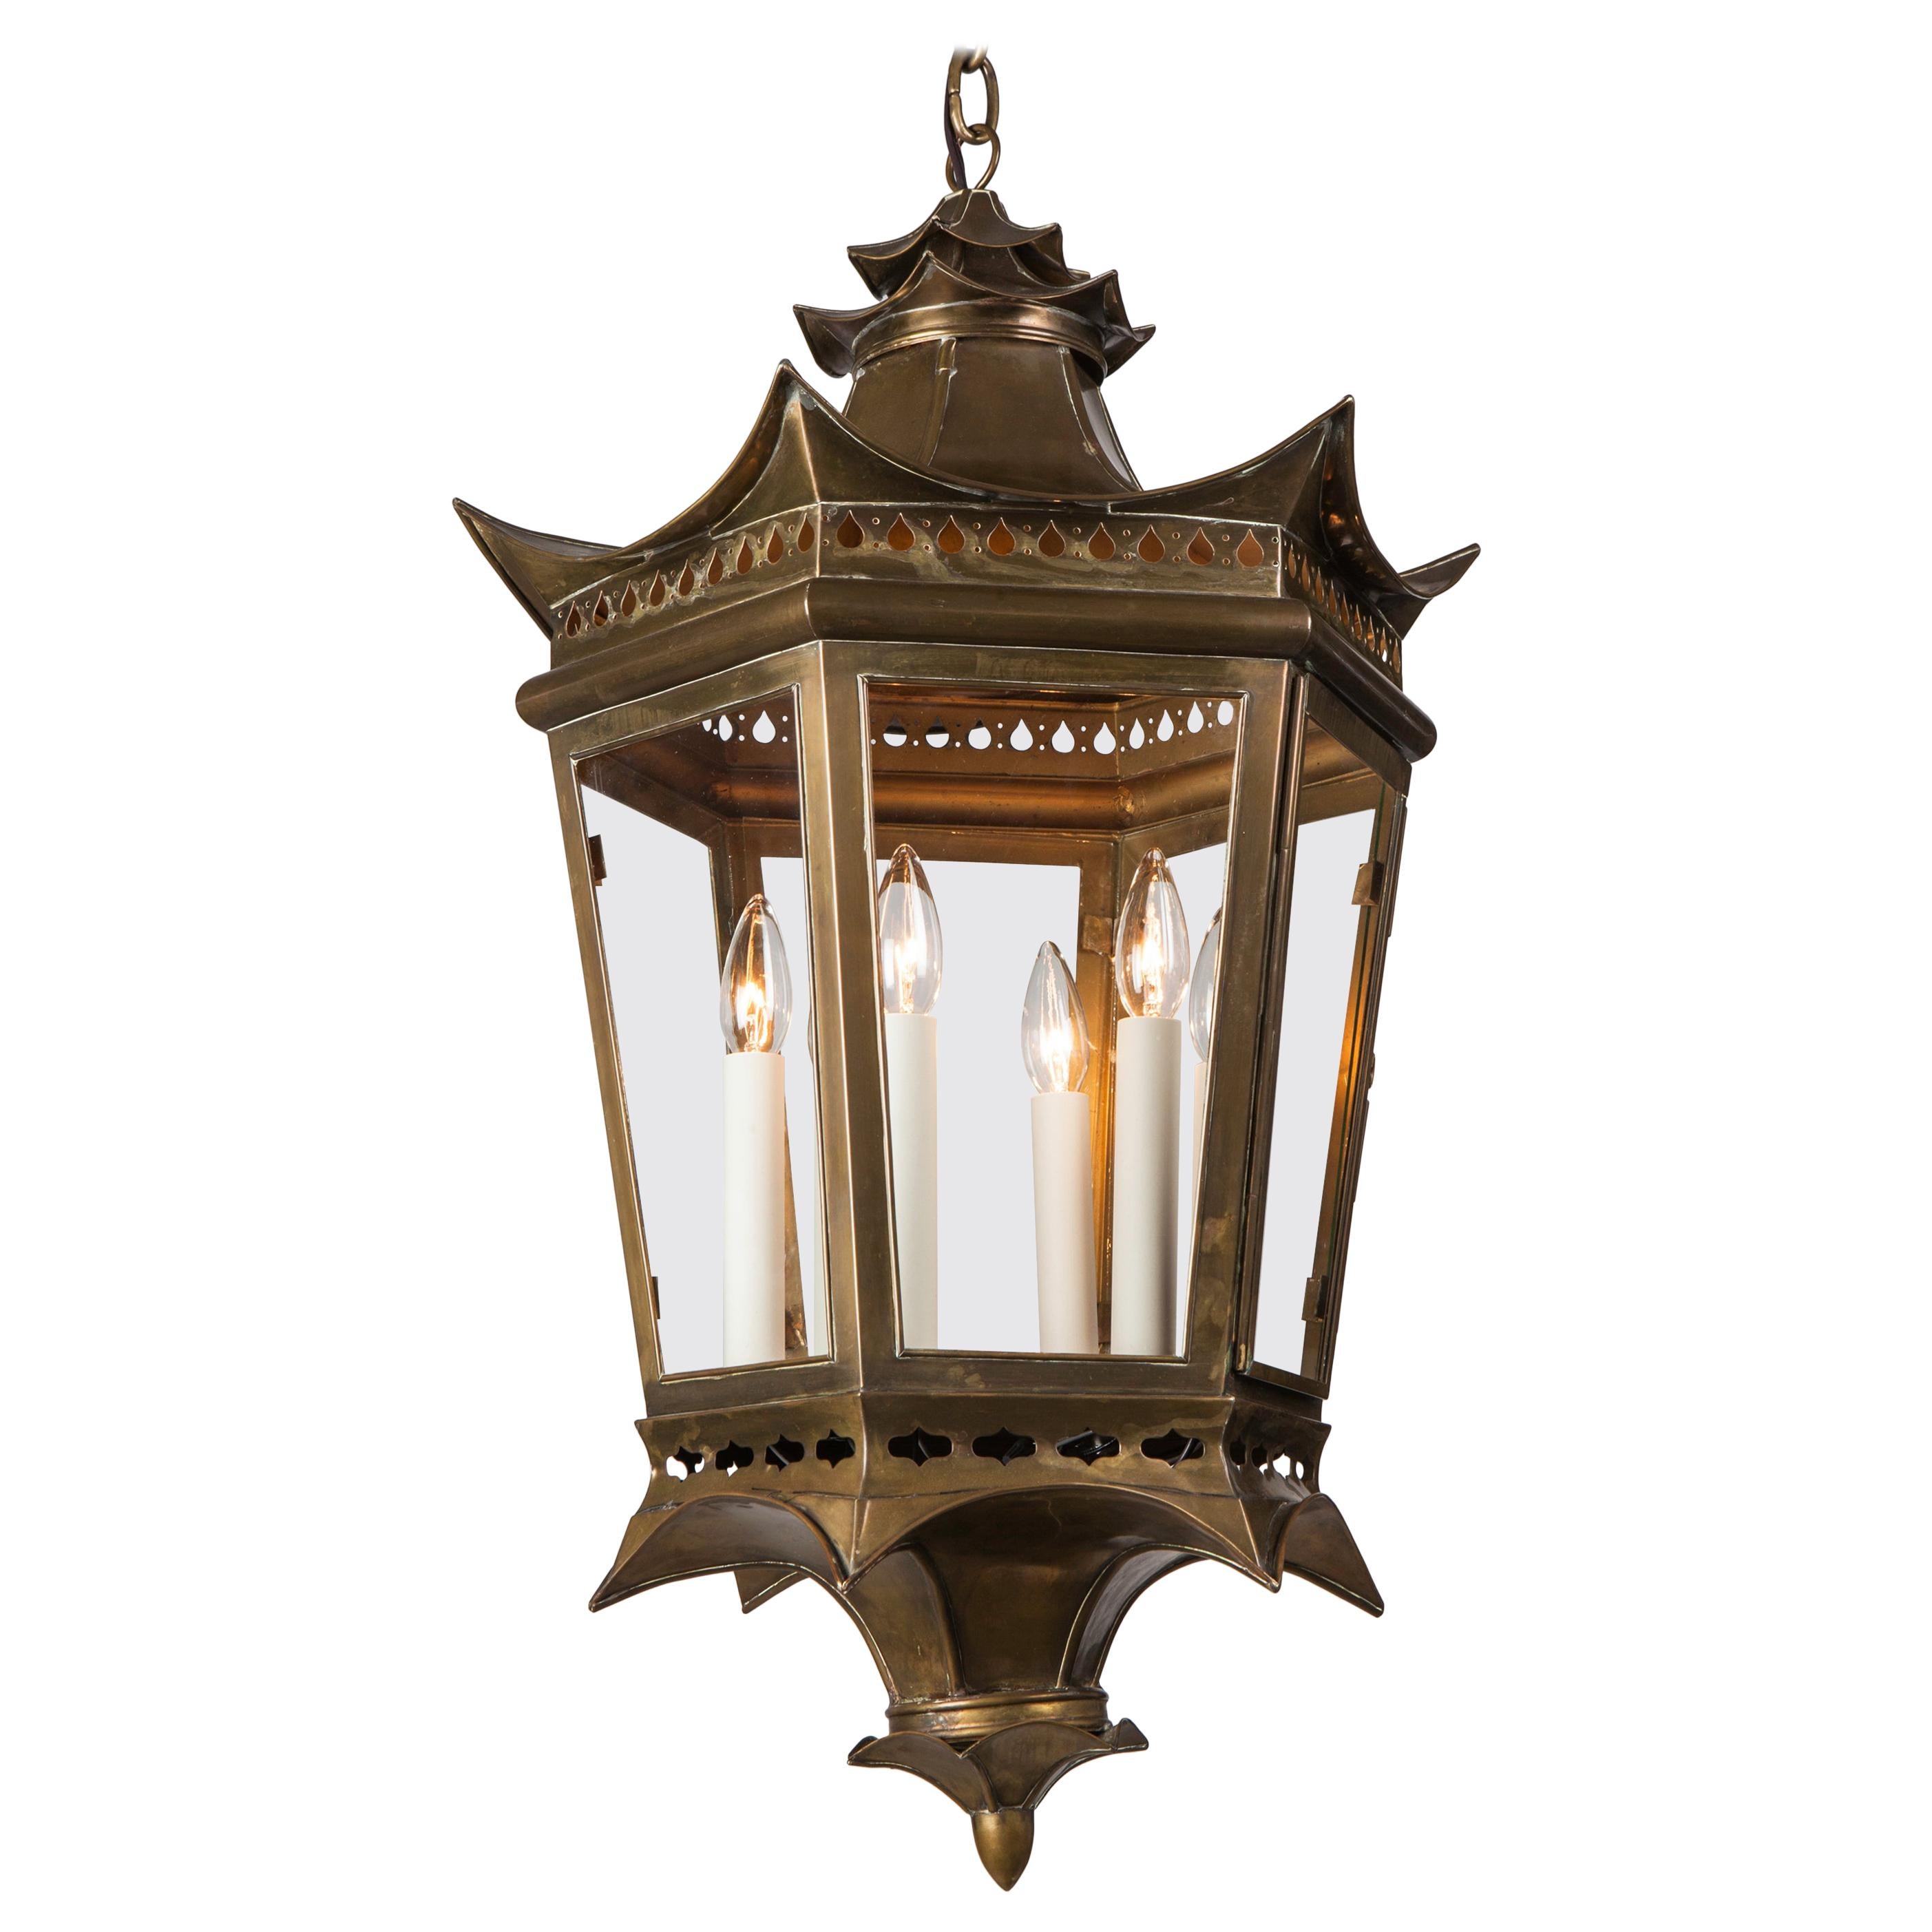 Vintage Hexagonal Pagoda Form Brass Lantern with Pierced Details, Circa 1940s